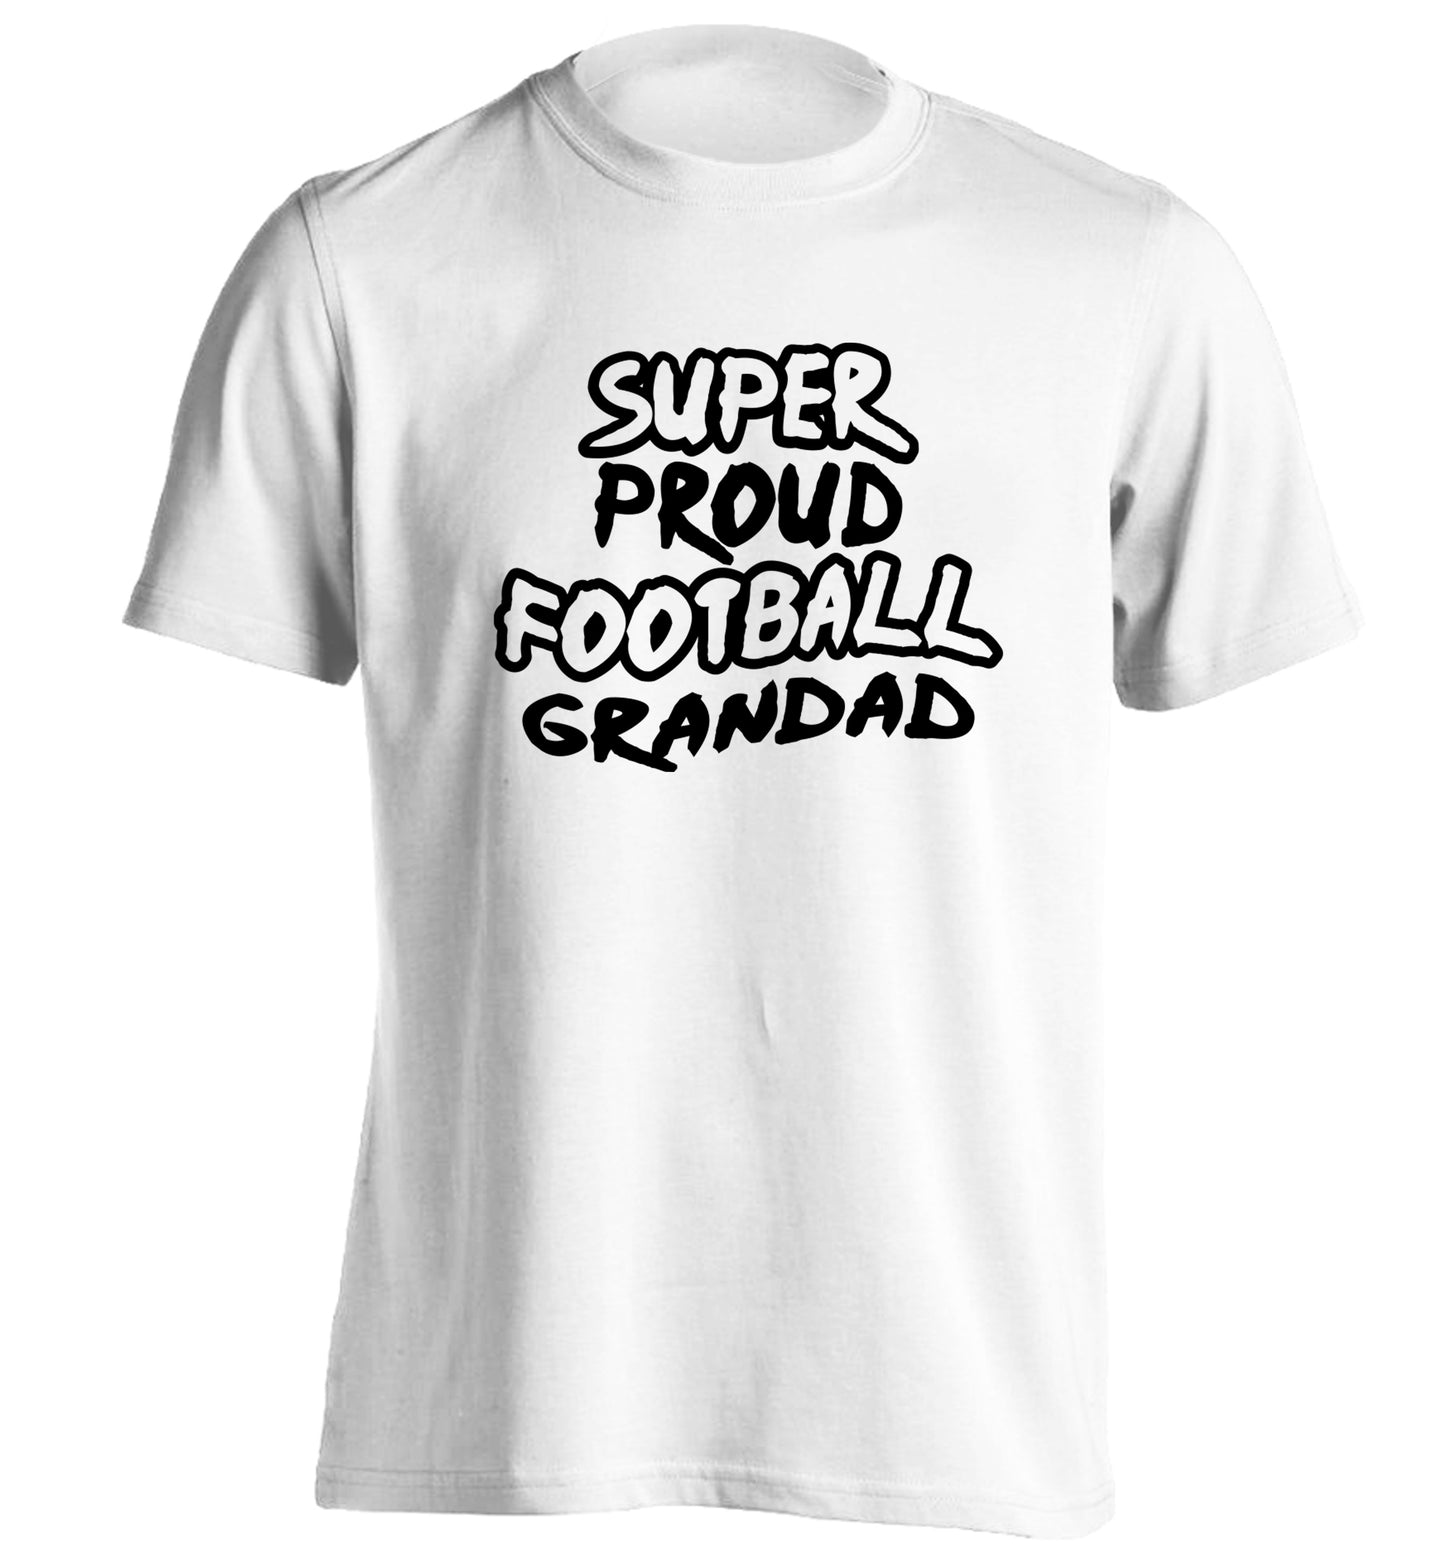 Super proud football grandad adults unisexwhite Tshirt 2XL